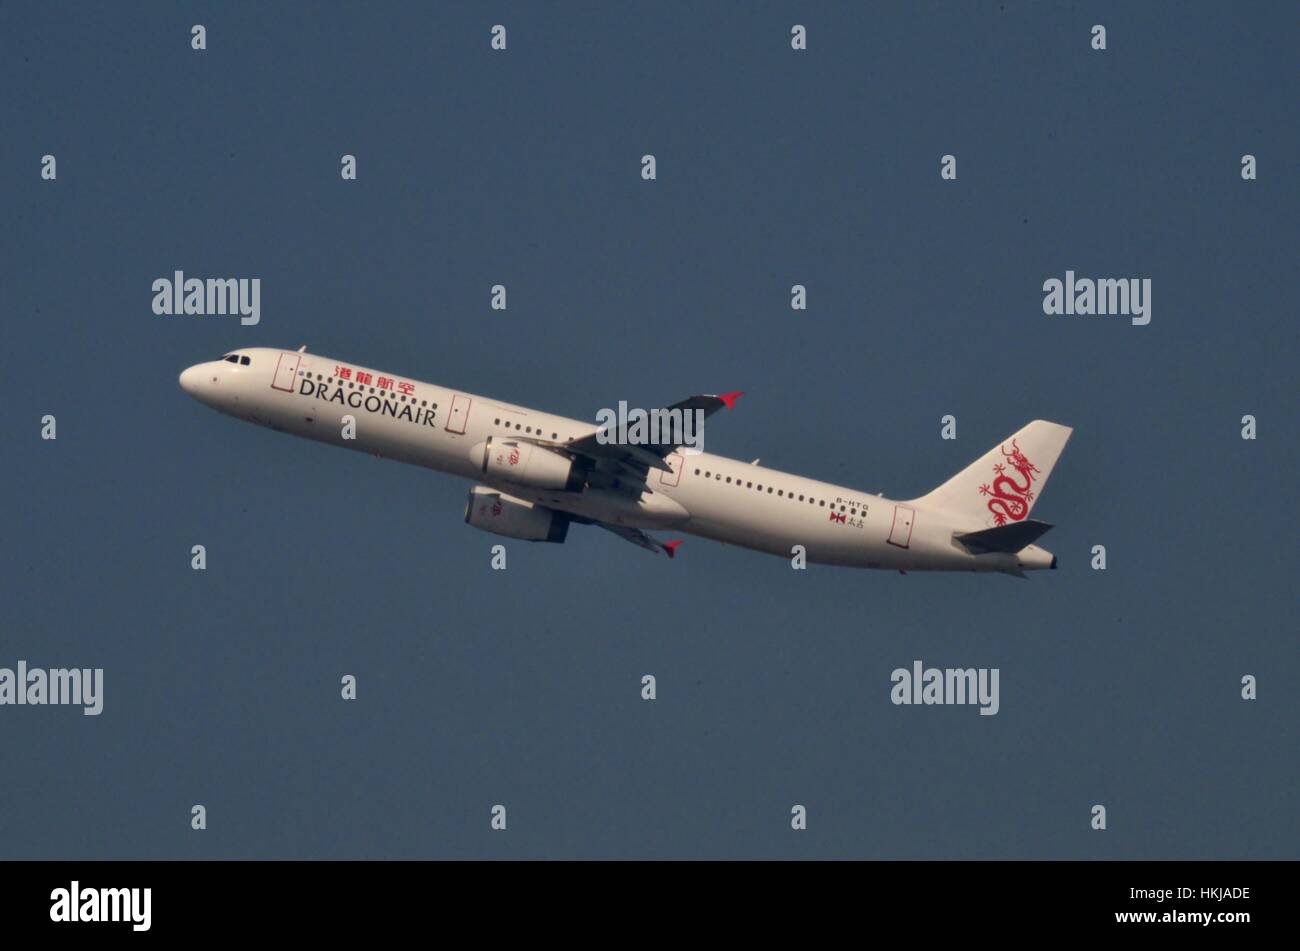 Dragonair Airbus 321-200 taking off from Hong Kong International Airport Stock Photo